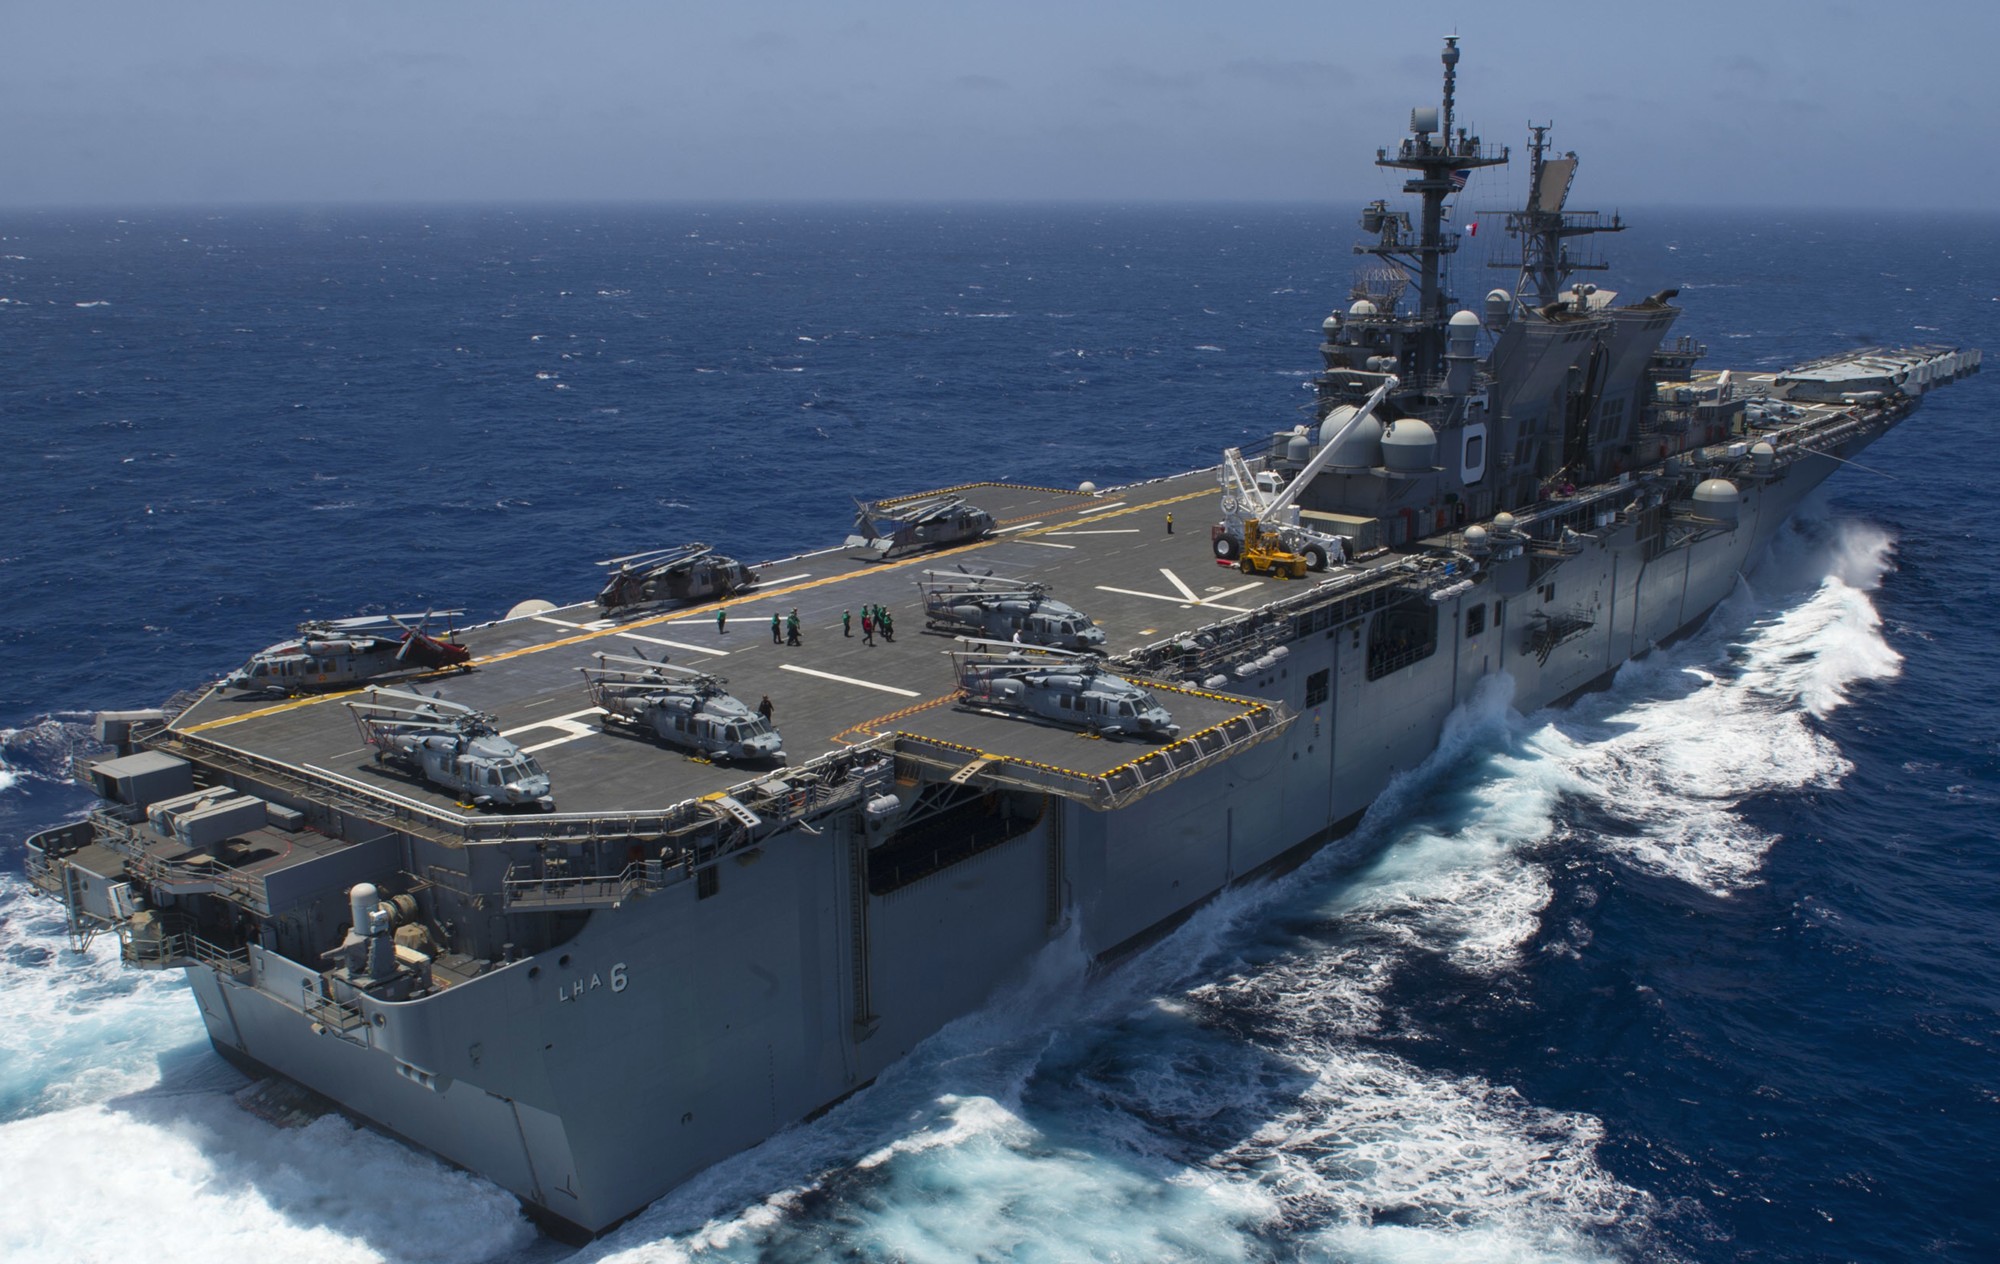 lha-6 uss america amphibious assault ship us navy 67